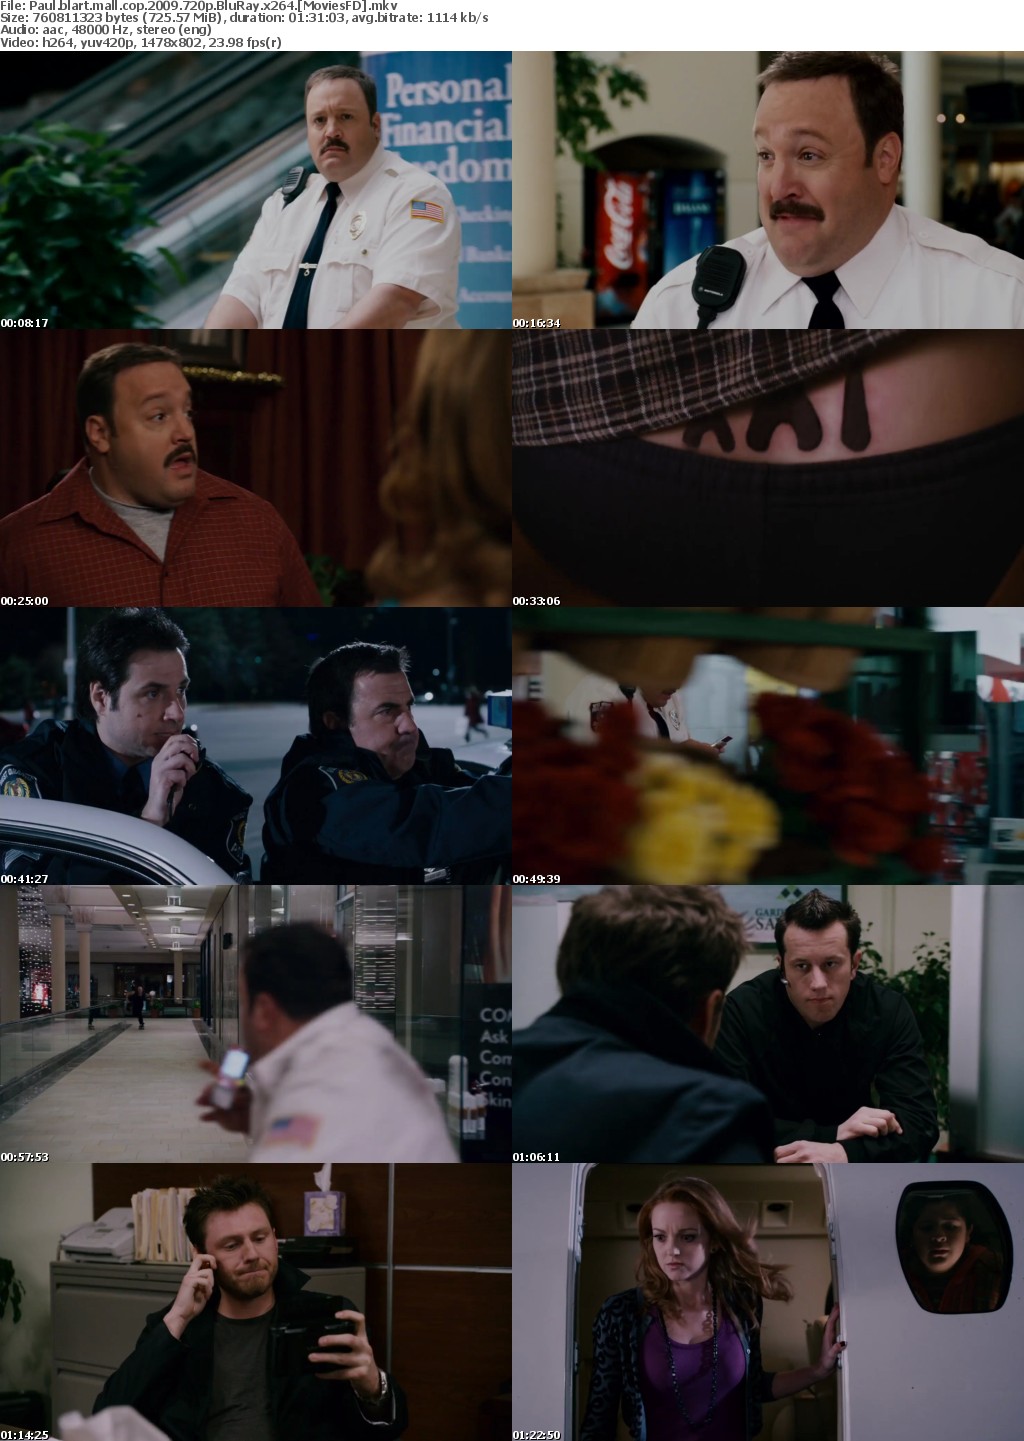 Paul Blart: Mall Cop (2009) 720p BluRay x264 - MoviesFD